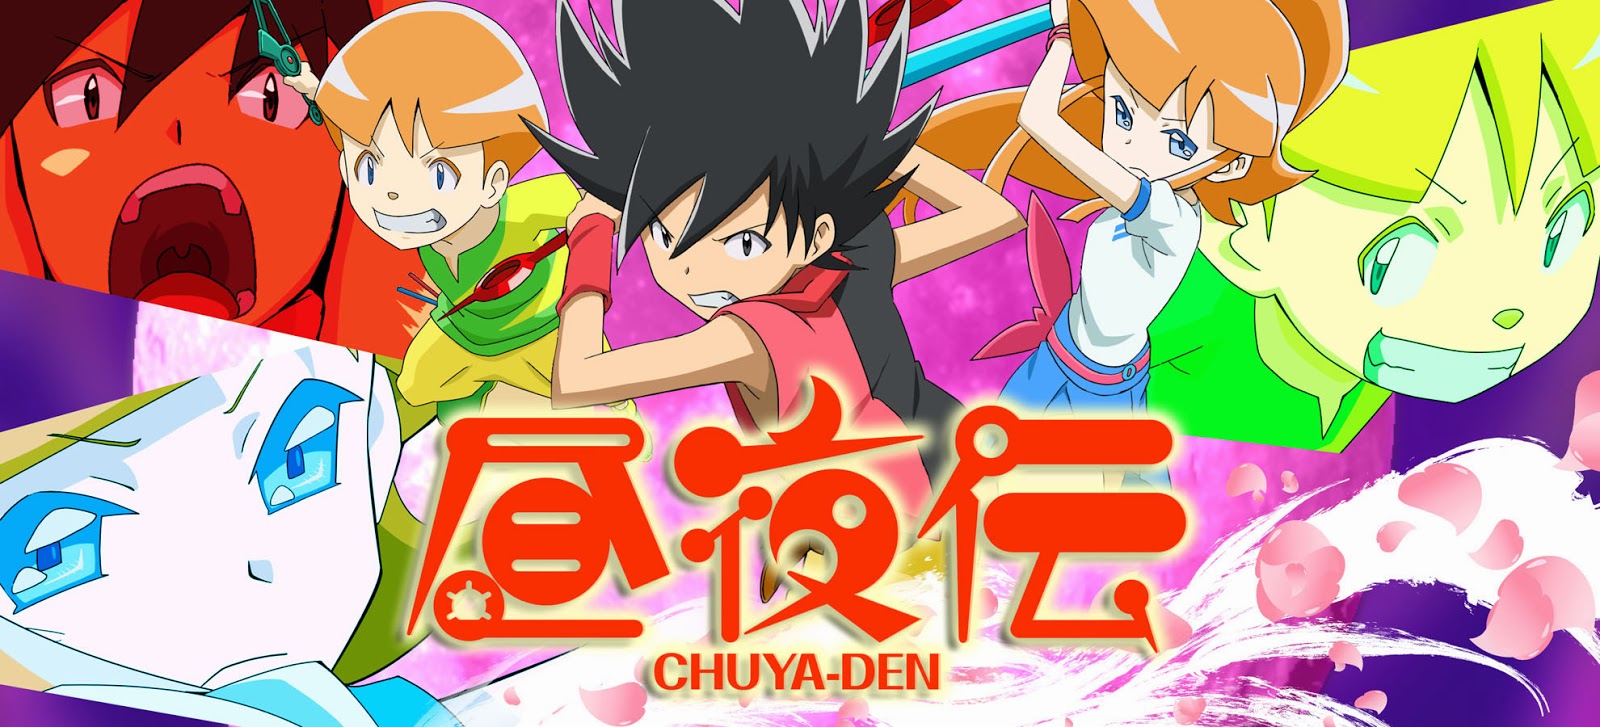 Anime Chuya-den: To regain the missing sun segundo vídeo promocional